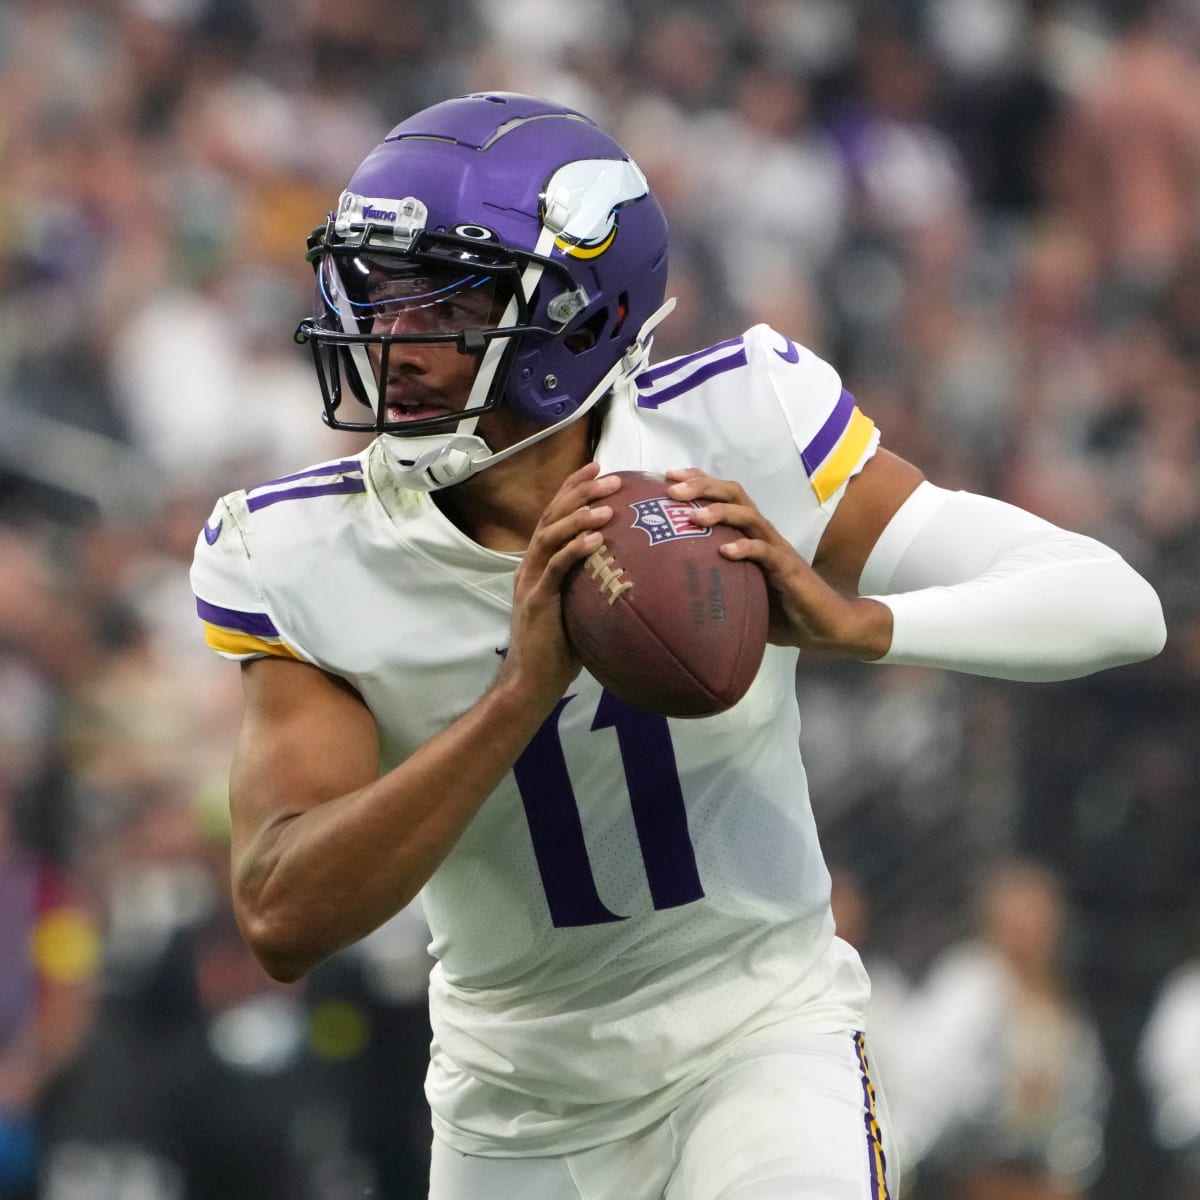 Former Minnesota Vikings quarterback is back working in the NFL